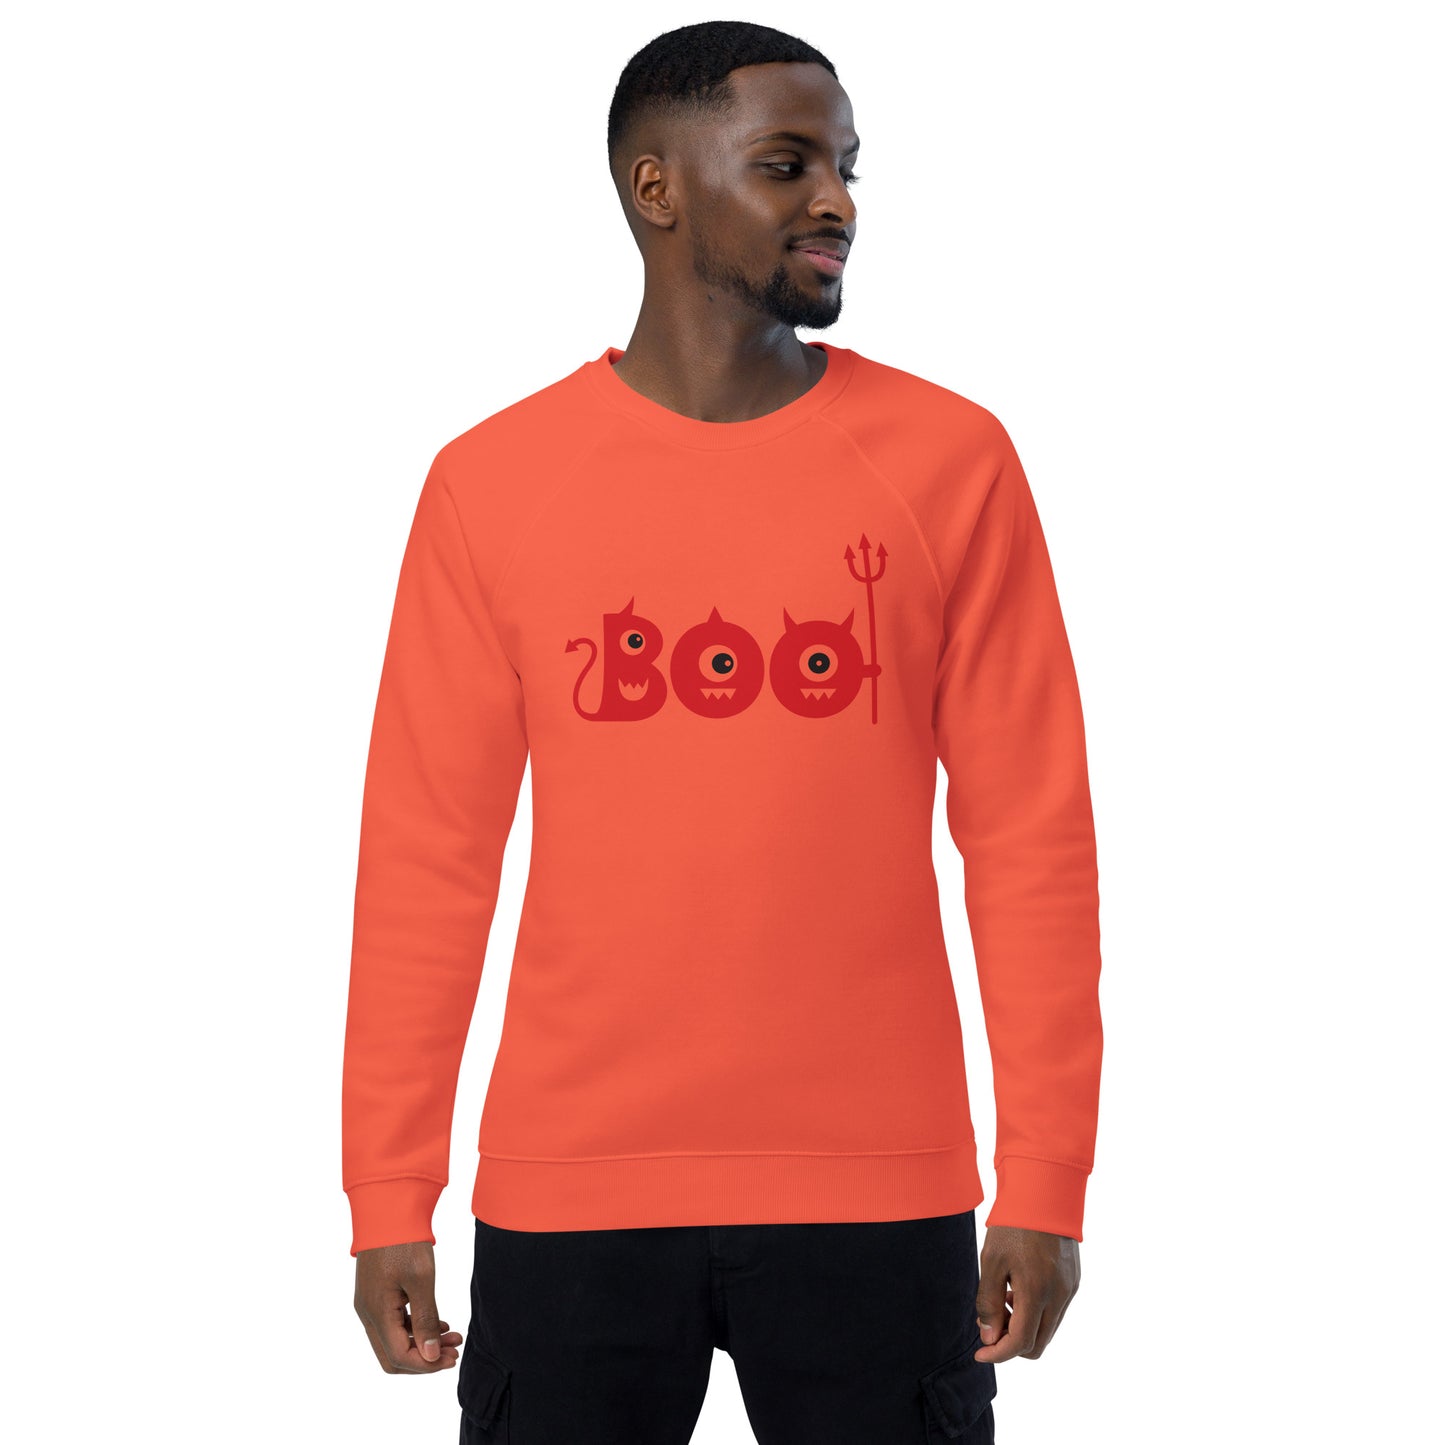 Unisex Bio Sweatshirt/Boo-Halloween